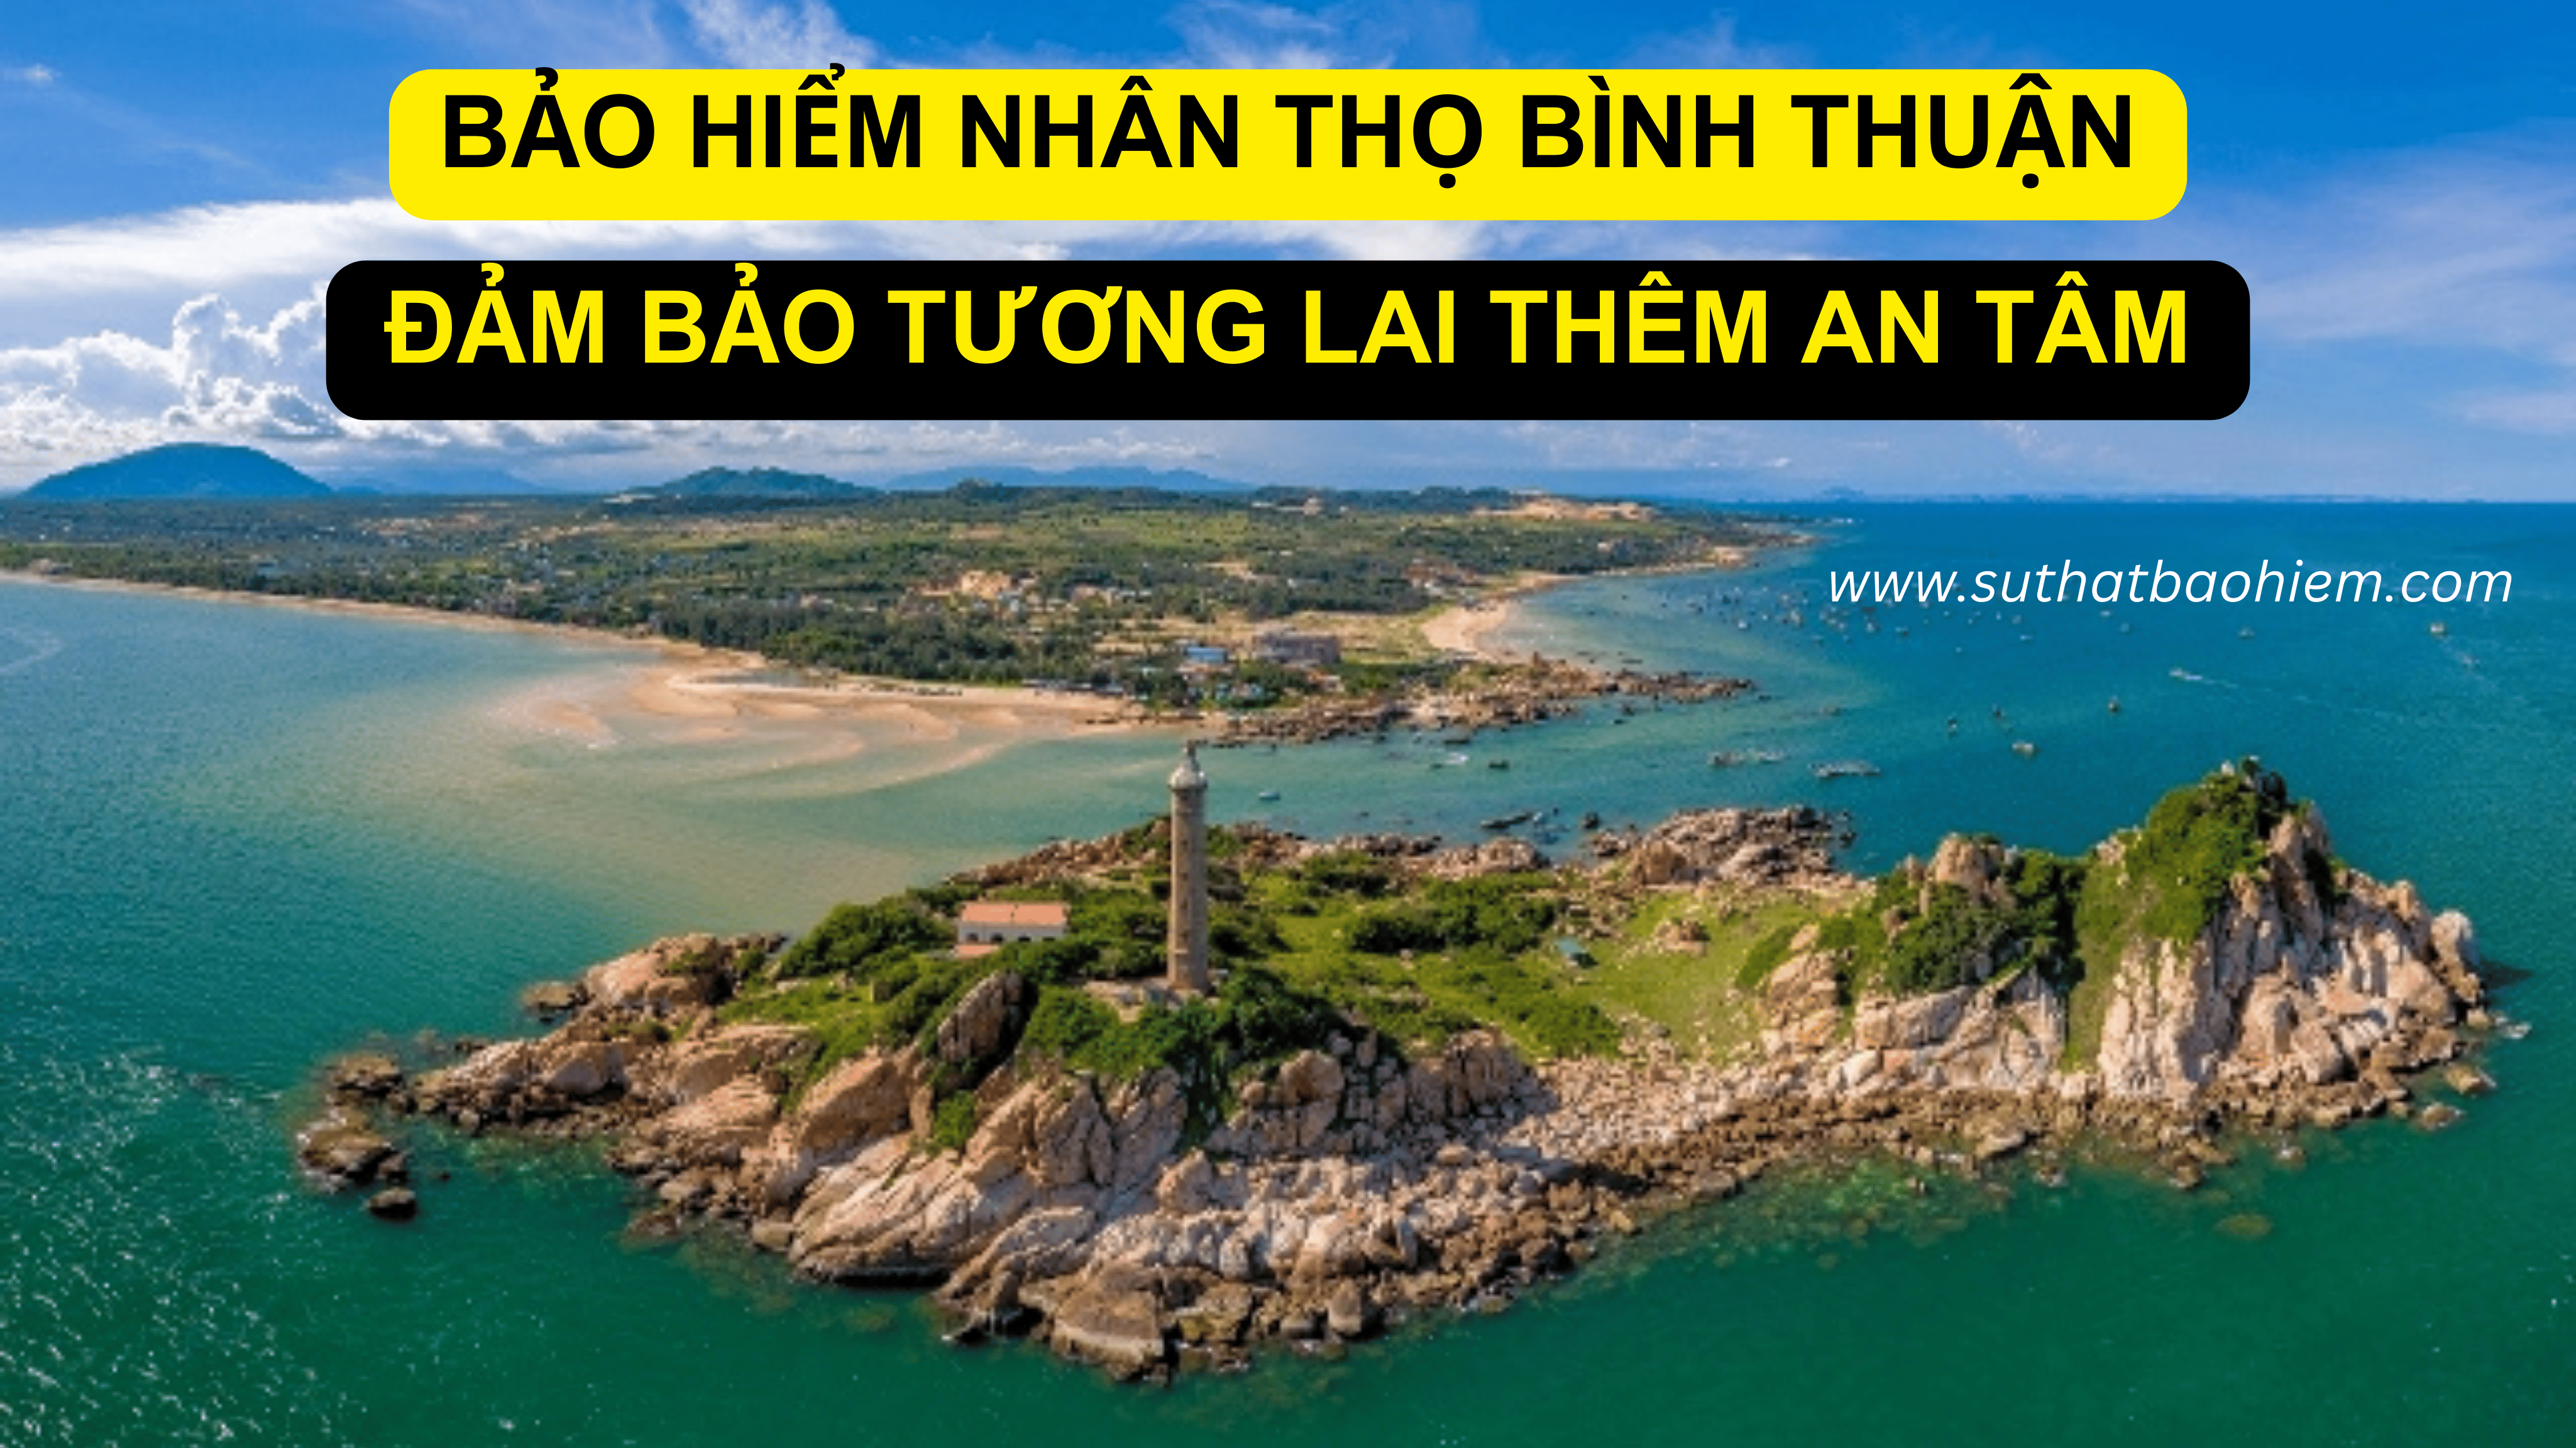 BAO HIEM NHAN THO HAI PHONG 7 1